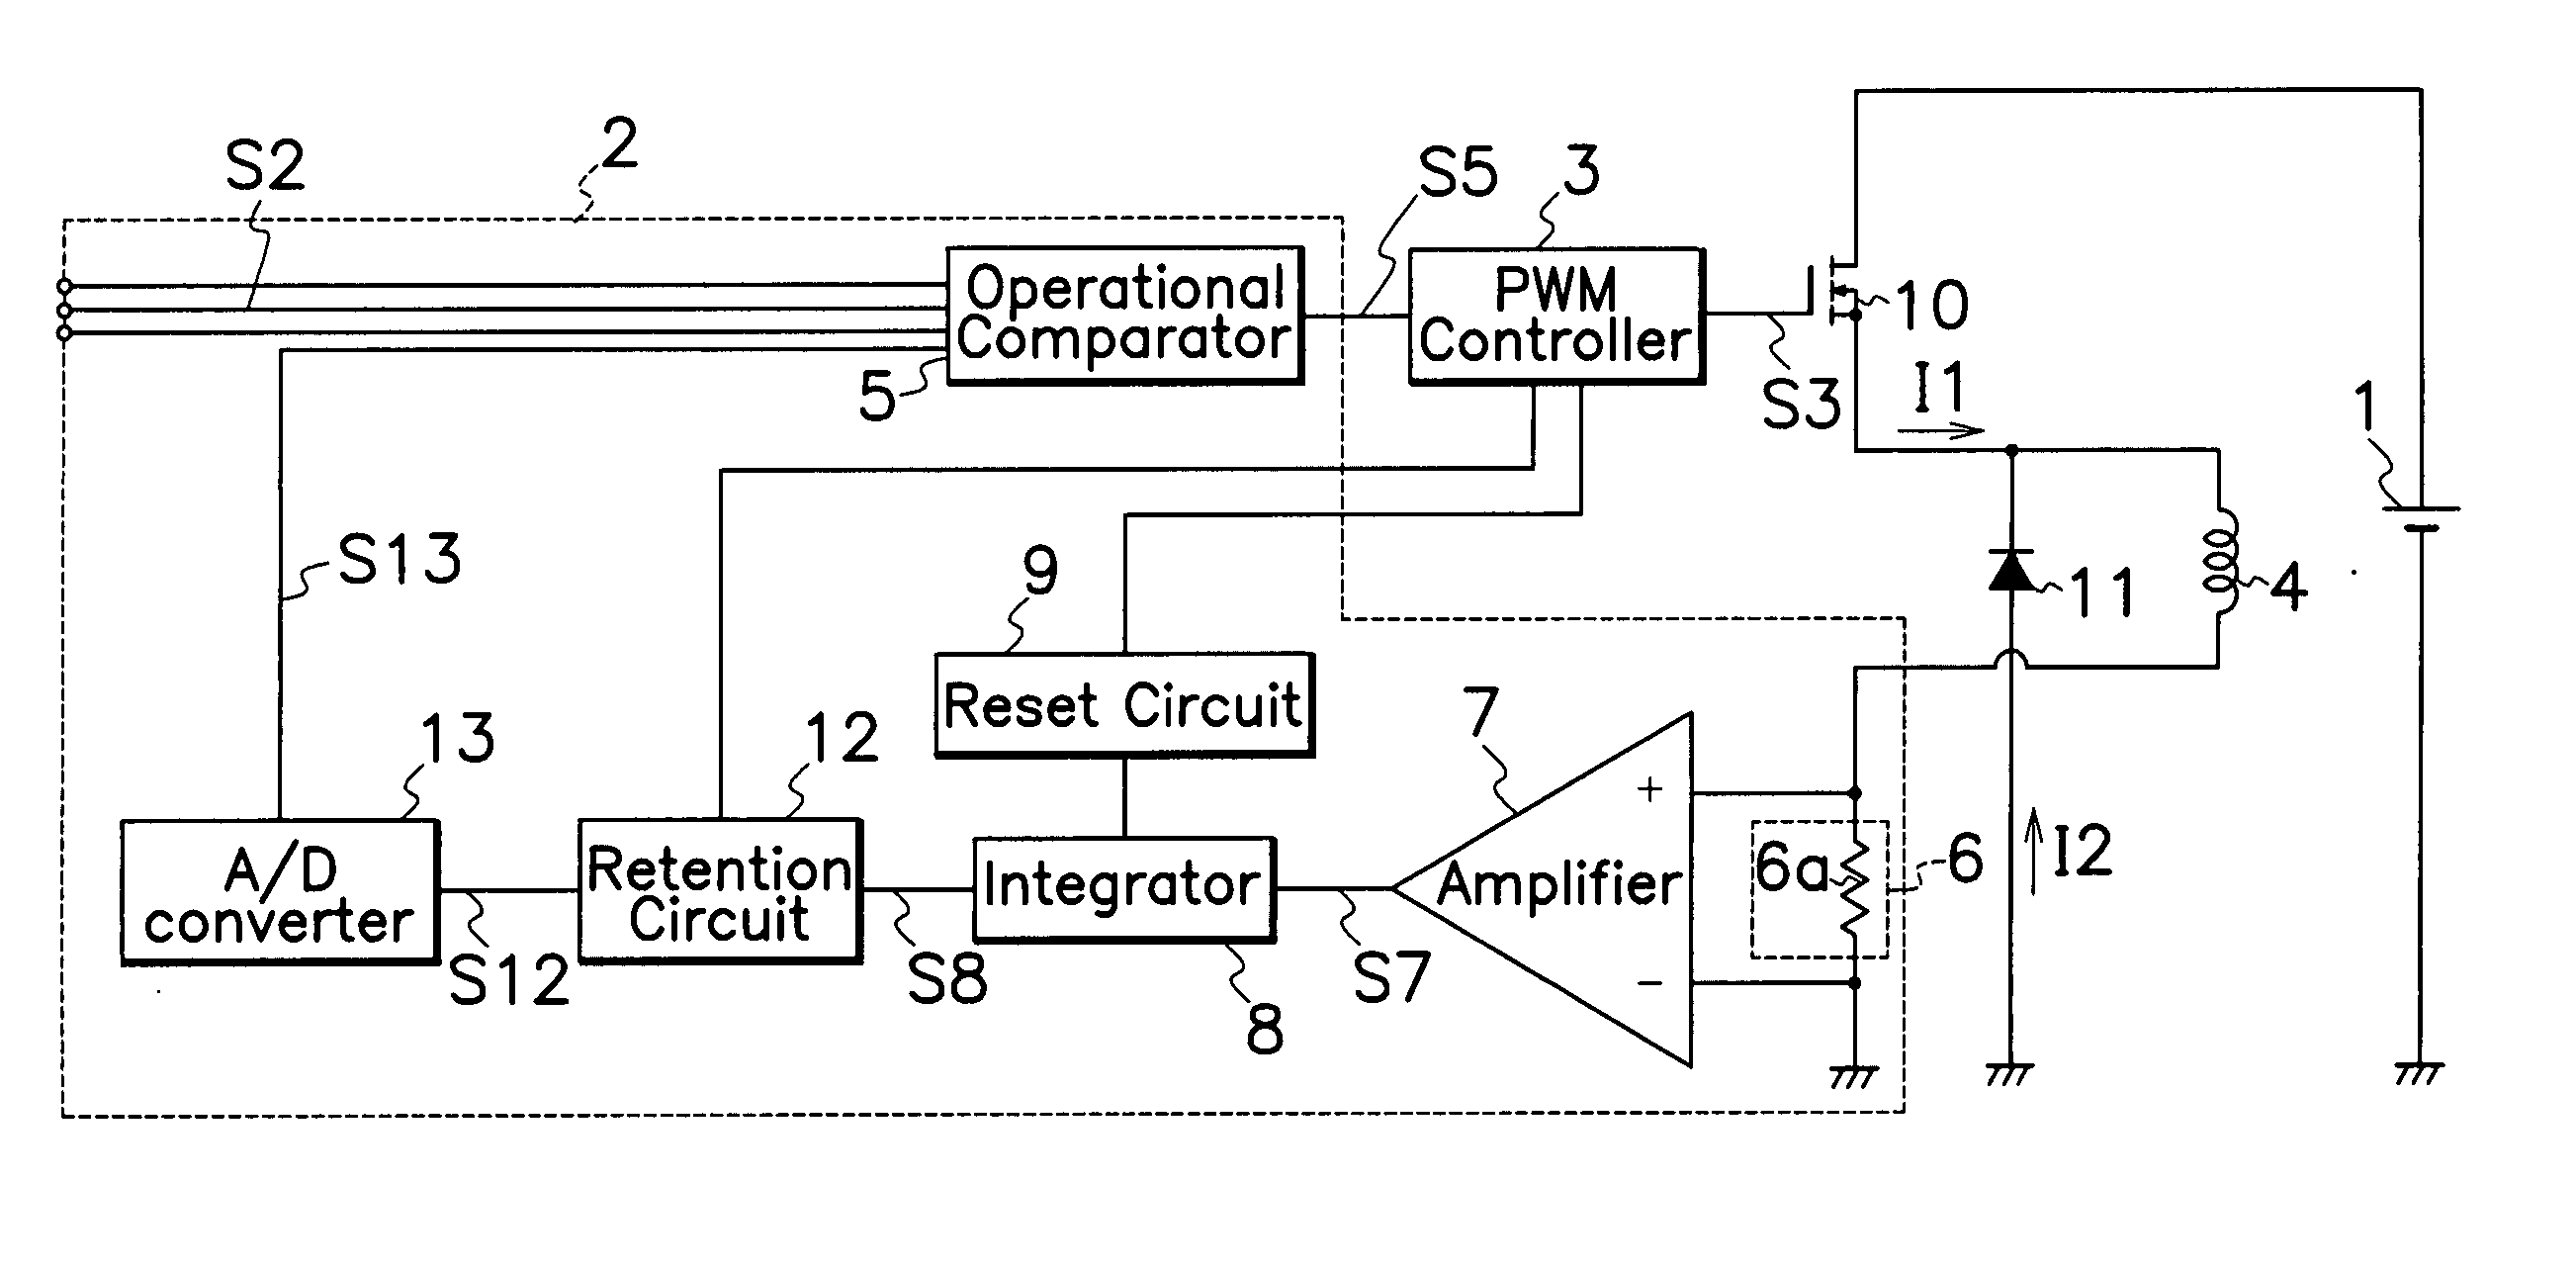 Solenoid drive circuit